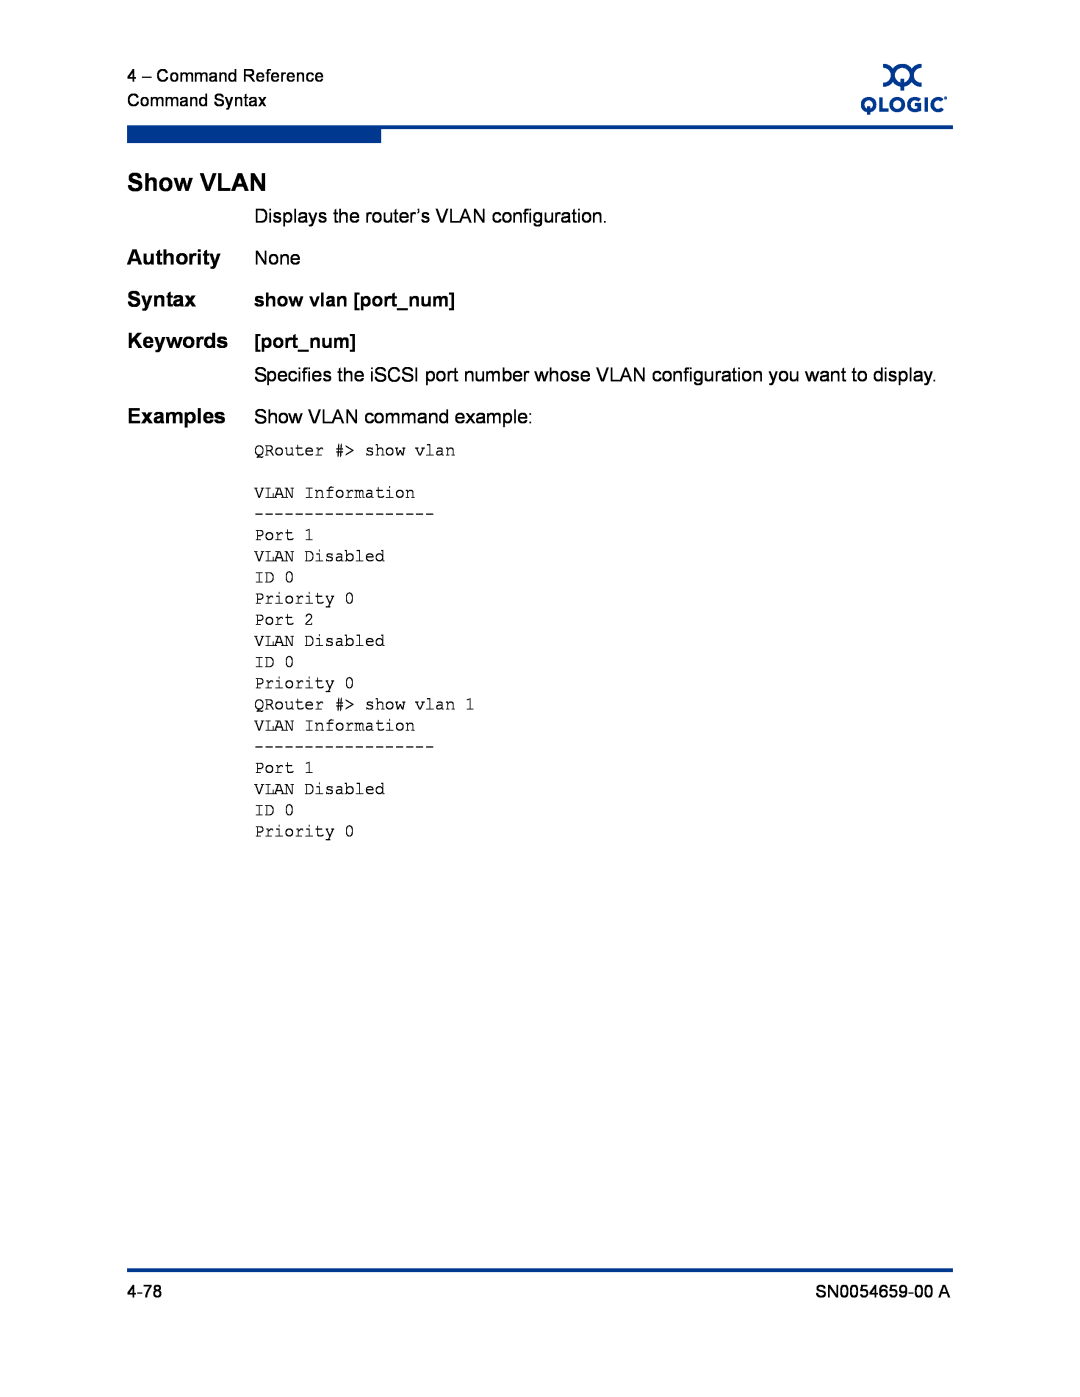 Q-Logic ISR6142 manual Show VLAN, Authority, Syntax, Keywords, Examples 